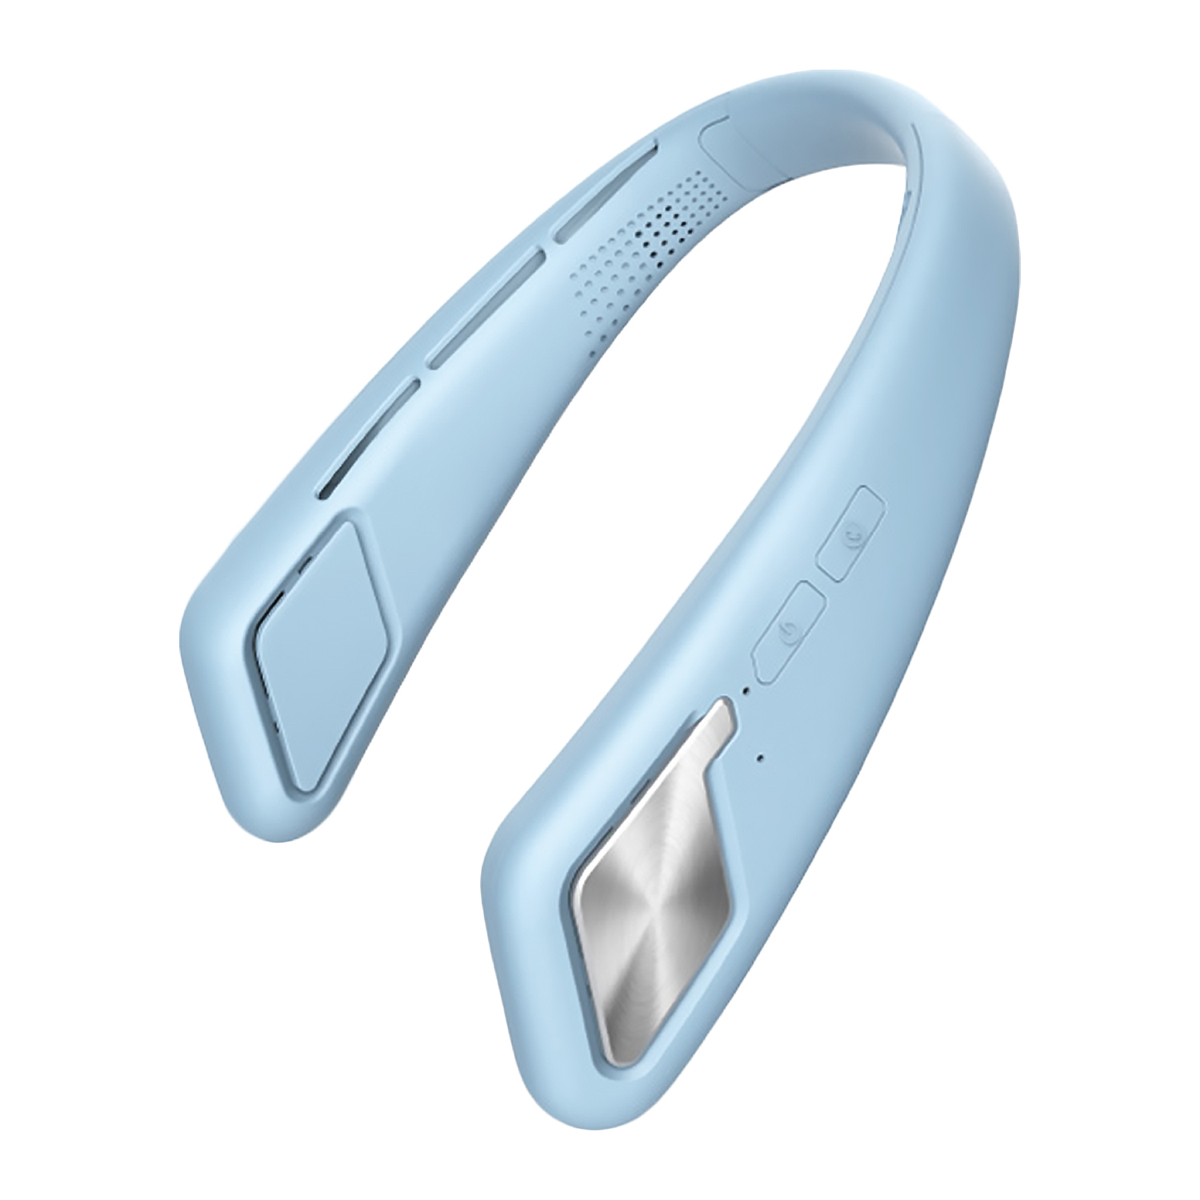 LEIGO Bluetooth-Verbindung, blau Ventilator USB-Ventilator Ventilator Tragbare Mini Halsventilator,